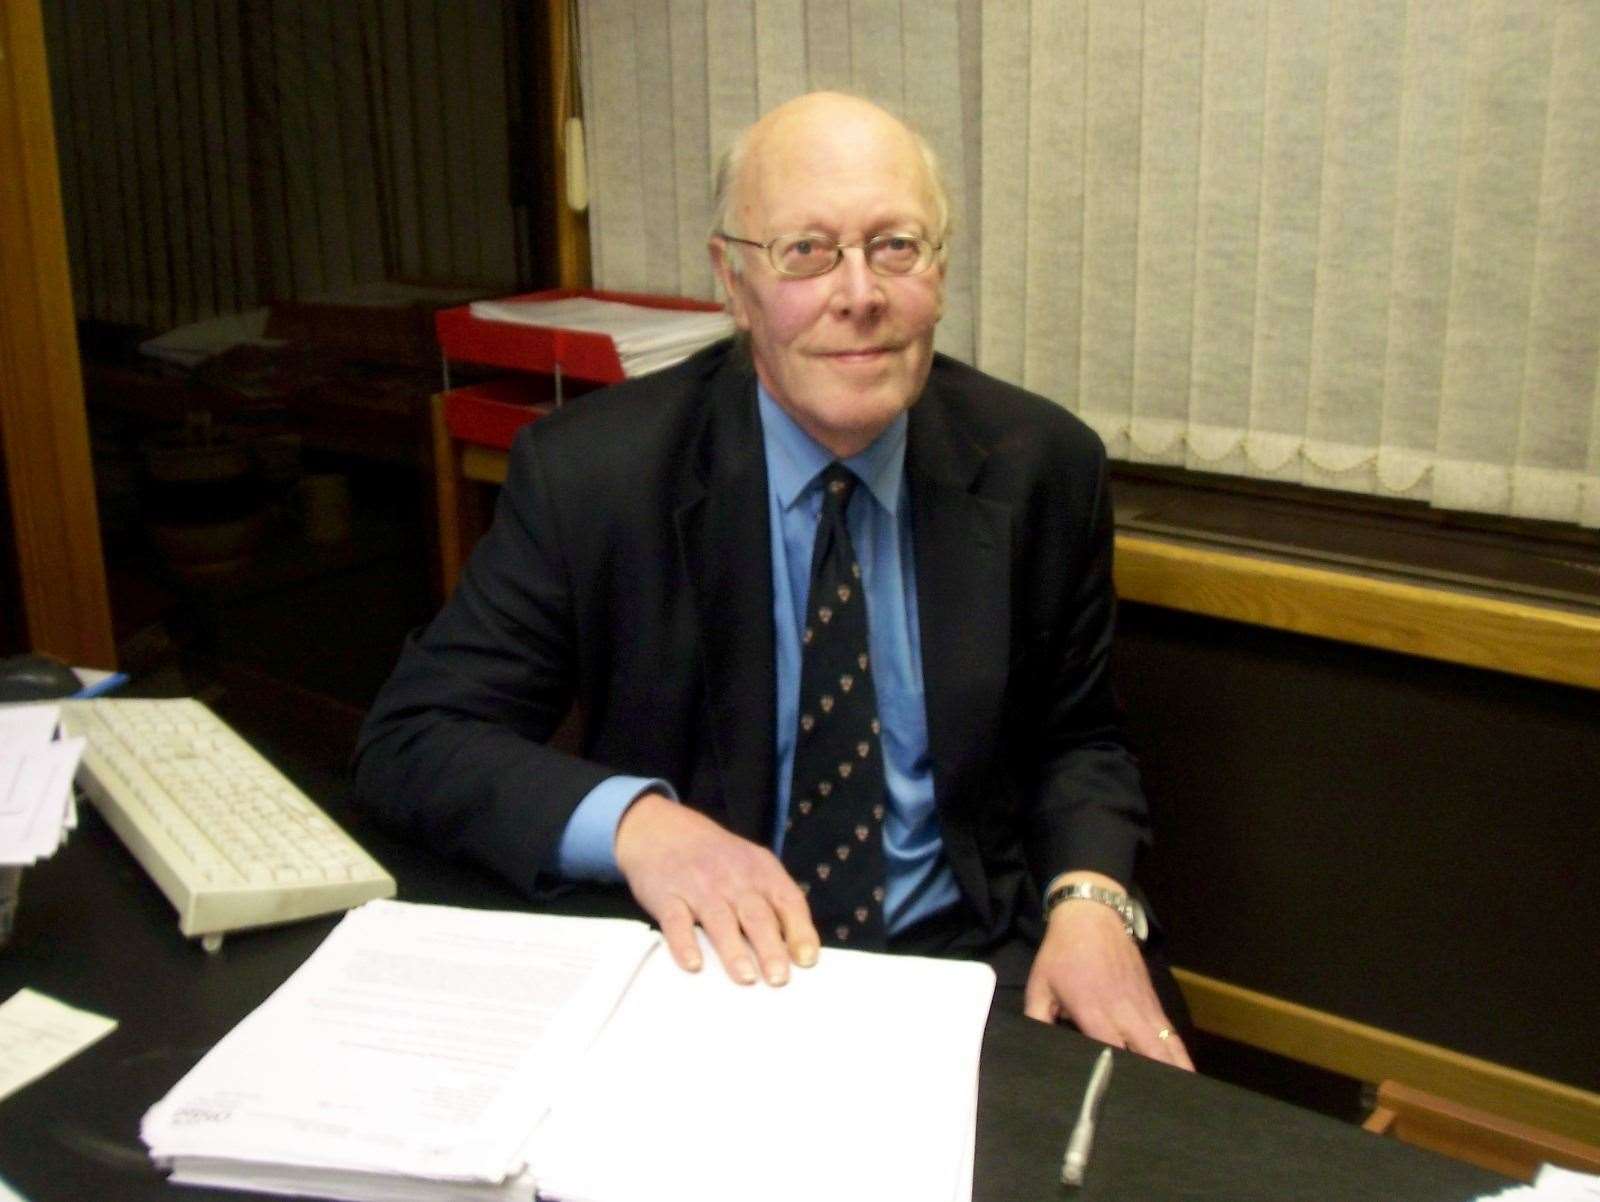 Faversham legend Mike Henderson has died aged 79